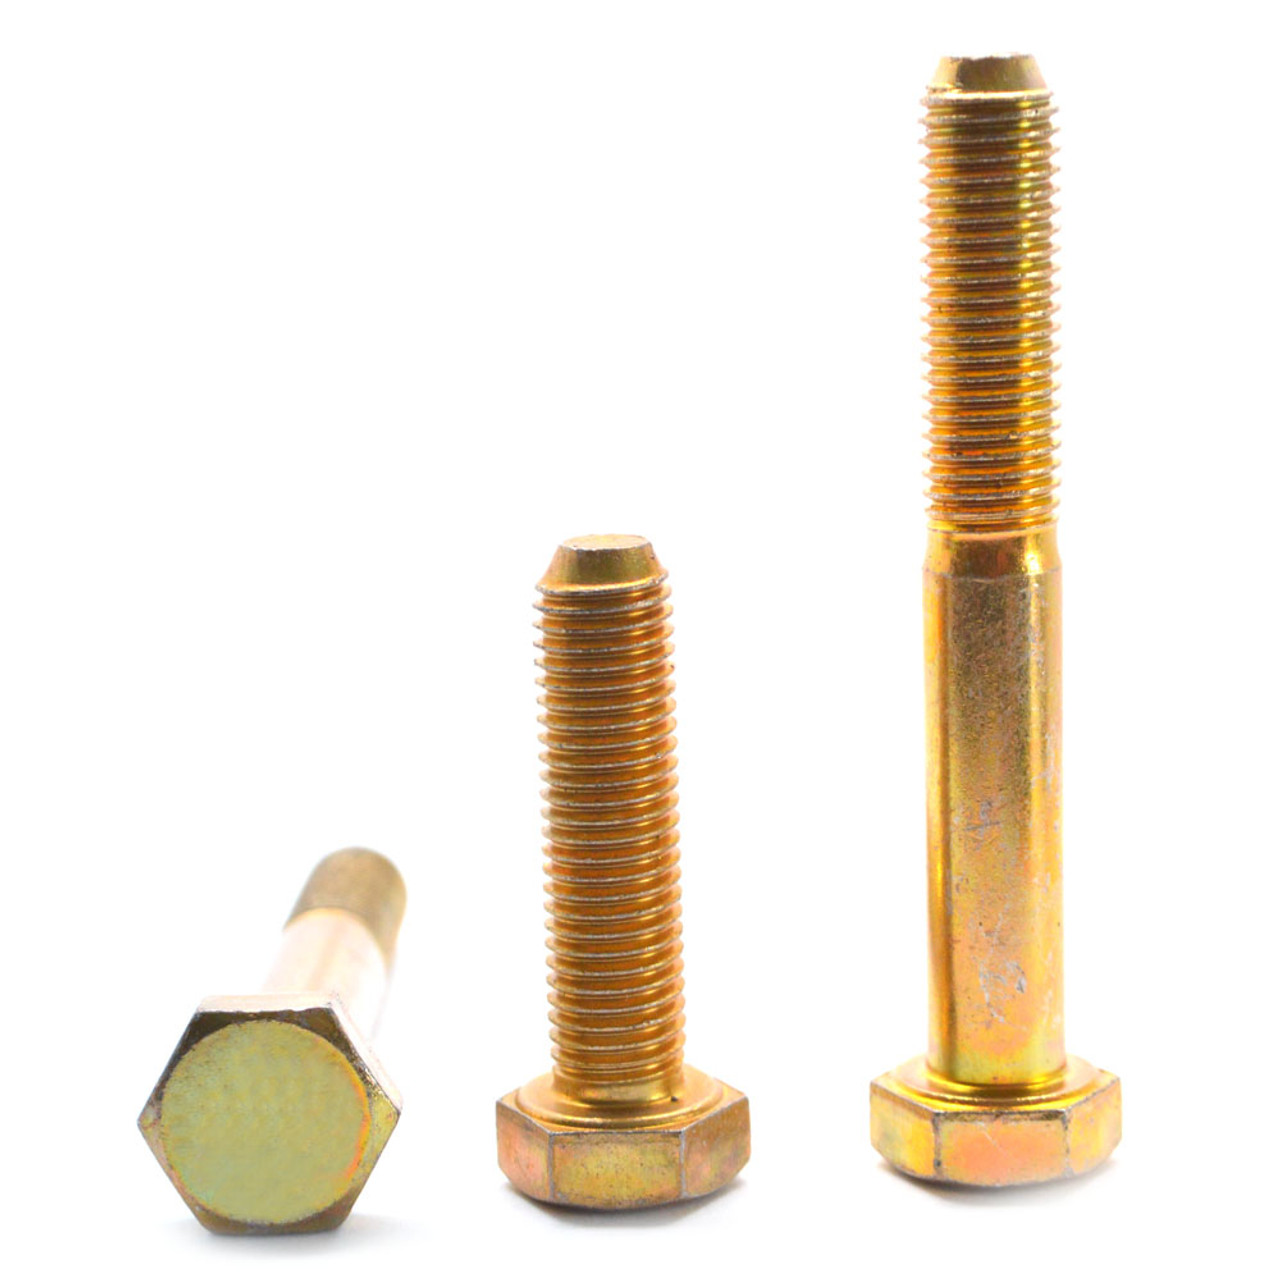 M12 x 1.75 x 90 MM (PT) Coarse Thread DIN 931 Class 10.9 Hex Cap Screw (Bolt) Alloy Steel Yellow Zinc Plated